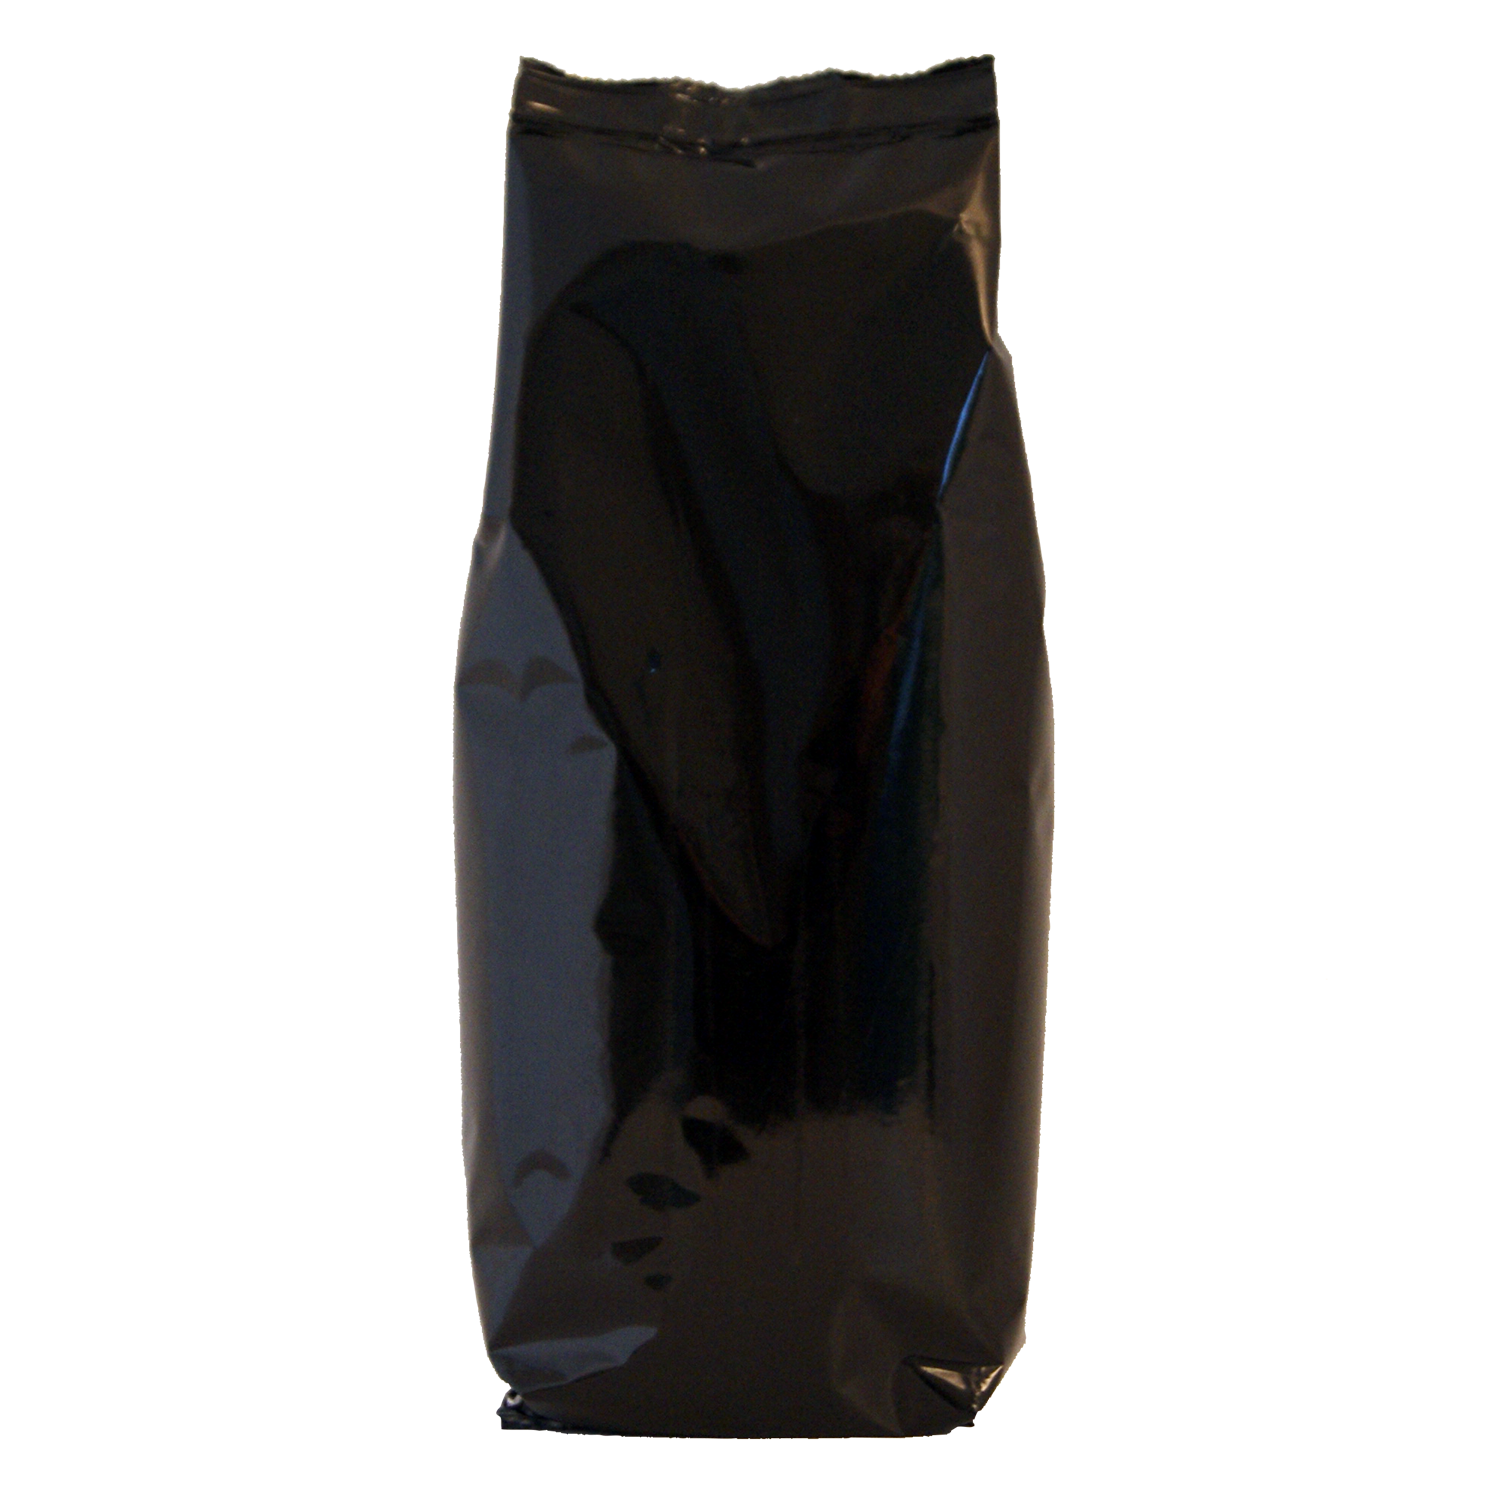 Sæsonkaffe 200g sort pose